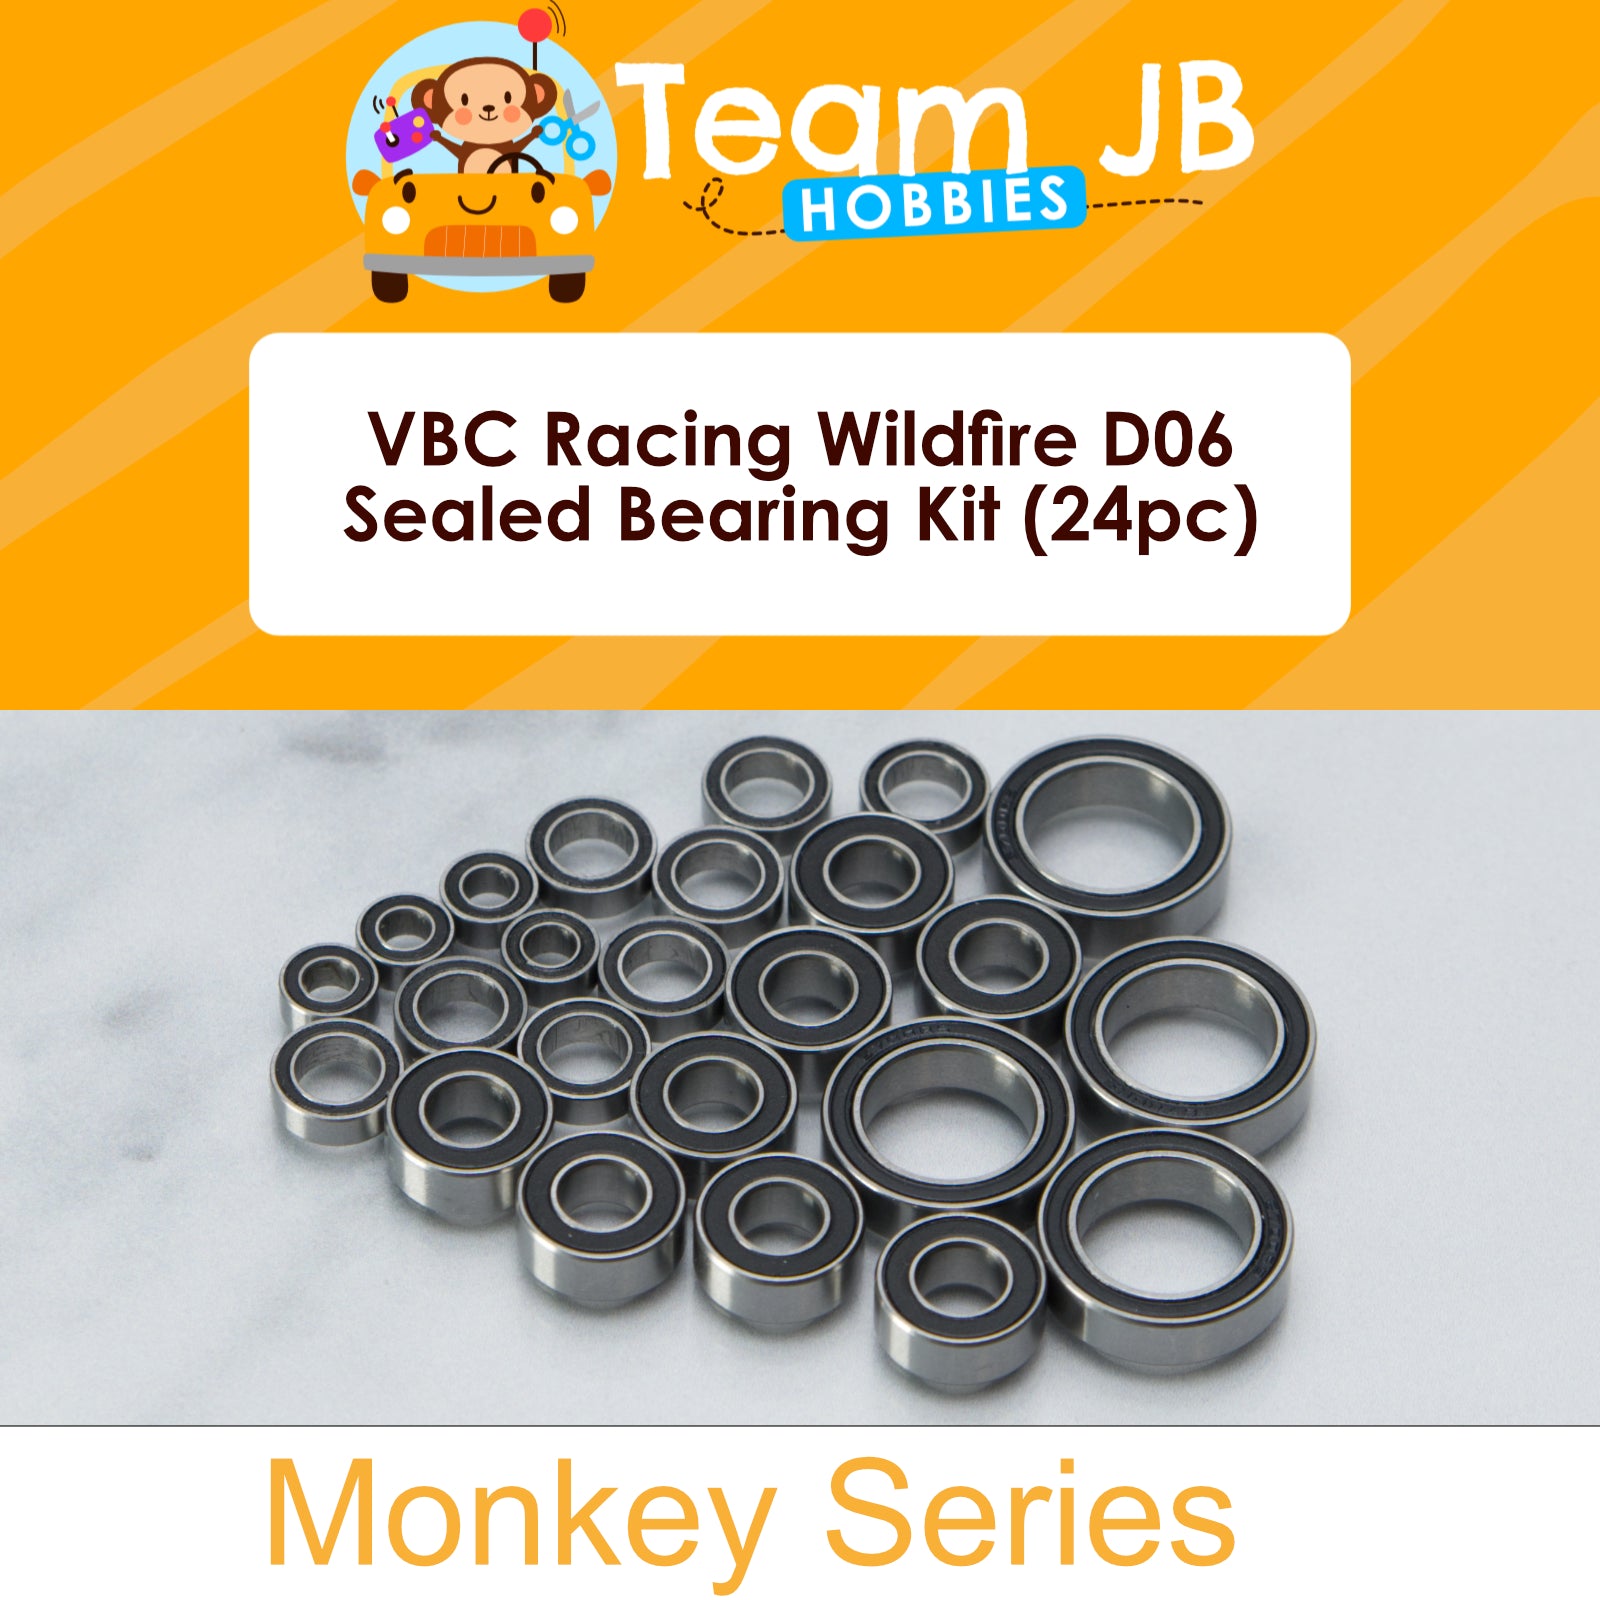 VBC Racing Wildfire D06 - Sealed Bearing Kit